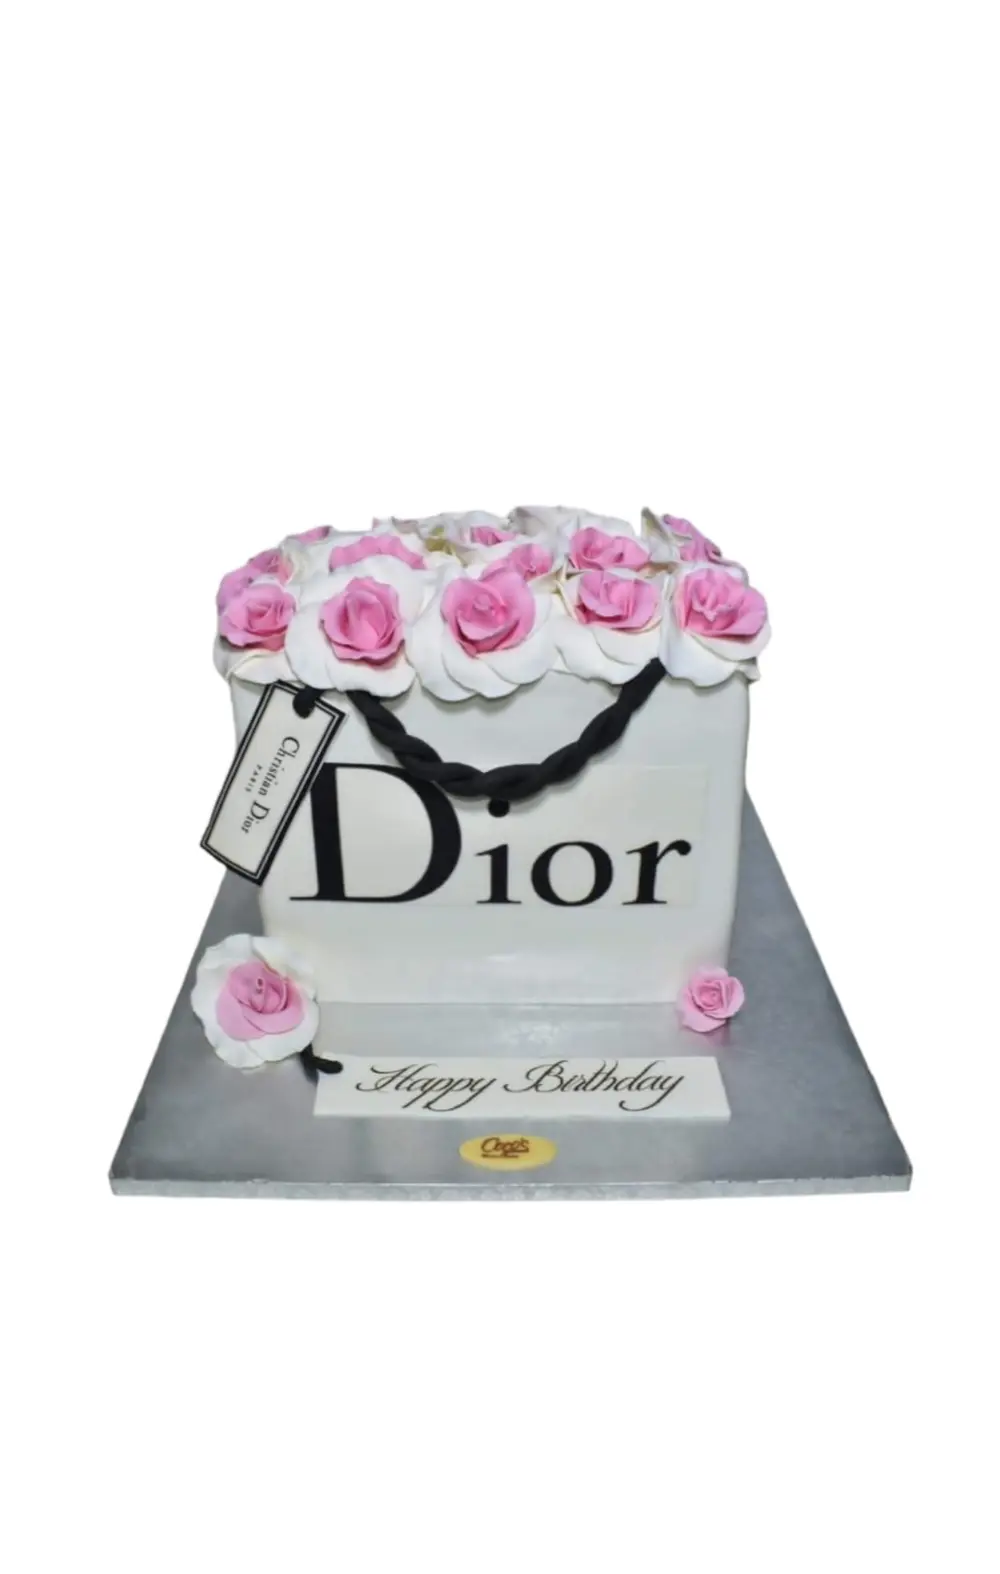 Luxury Brand Themed Cakes